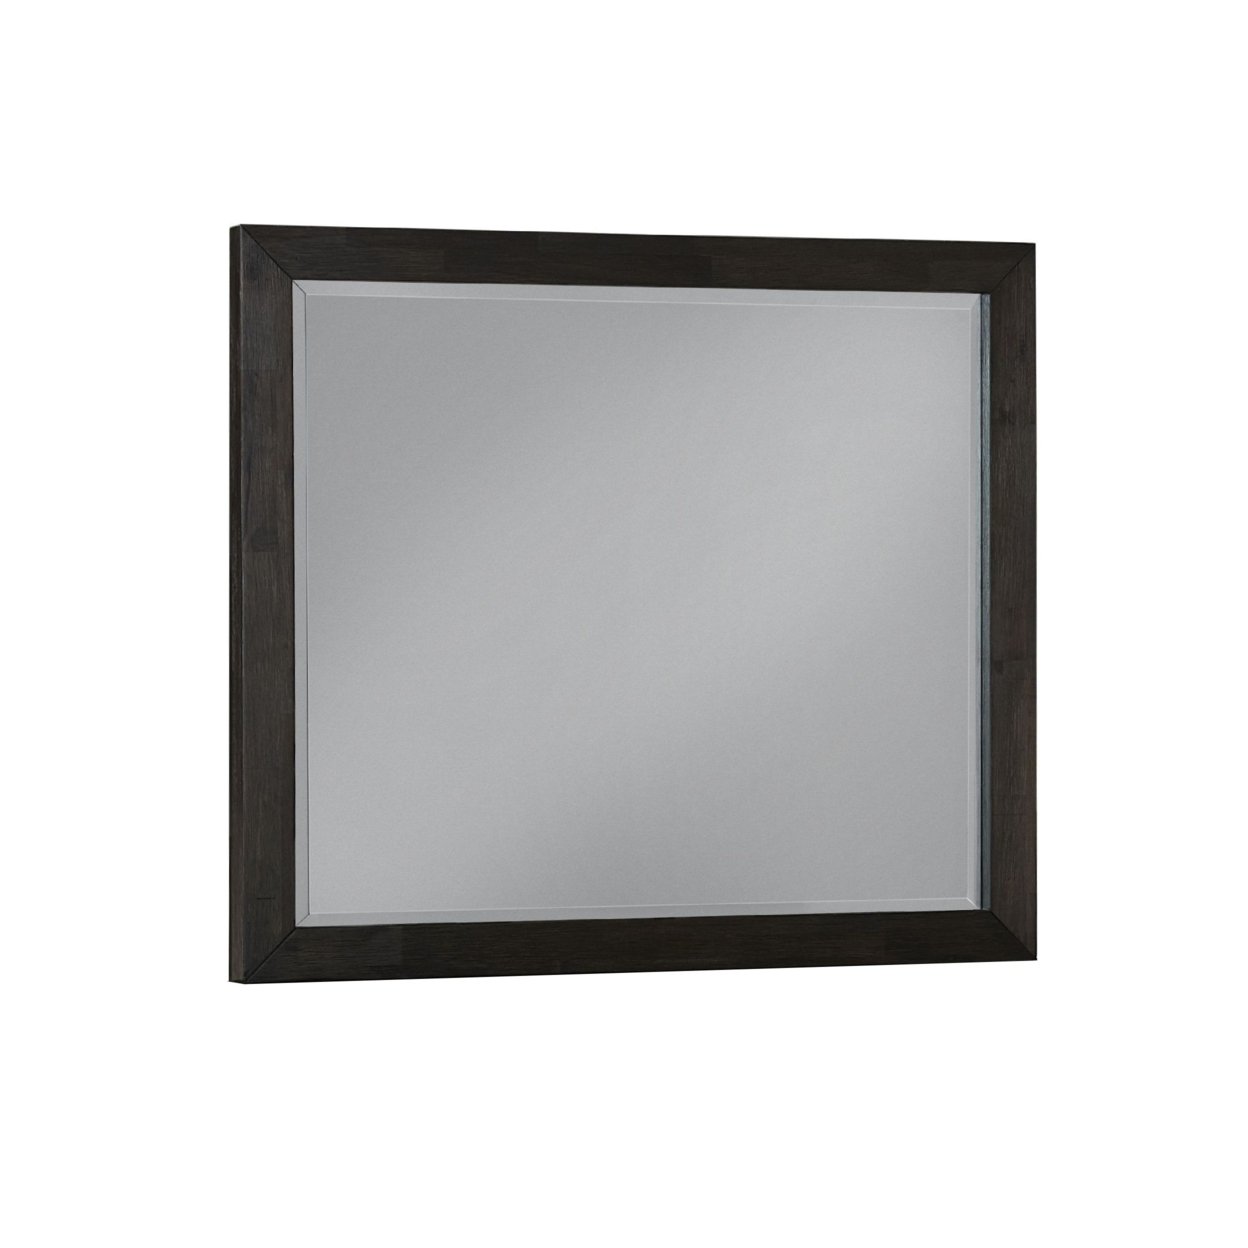 Moe 47 Inch Dresser Mirror With Rectangular Wood Frame, Espresso Brown- Saltoro Sherpi